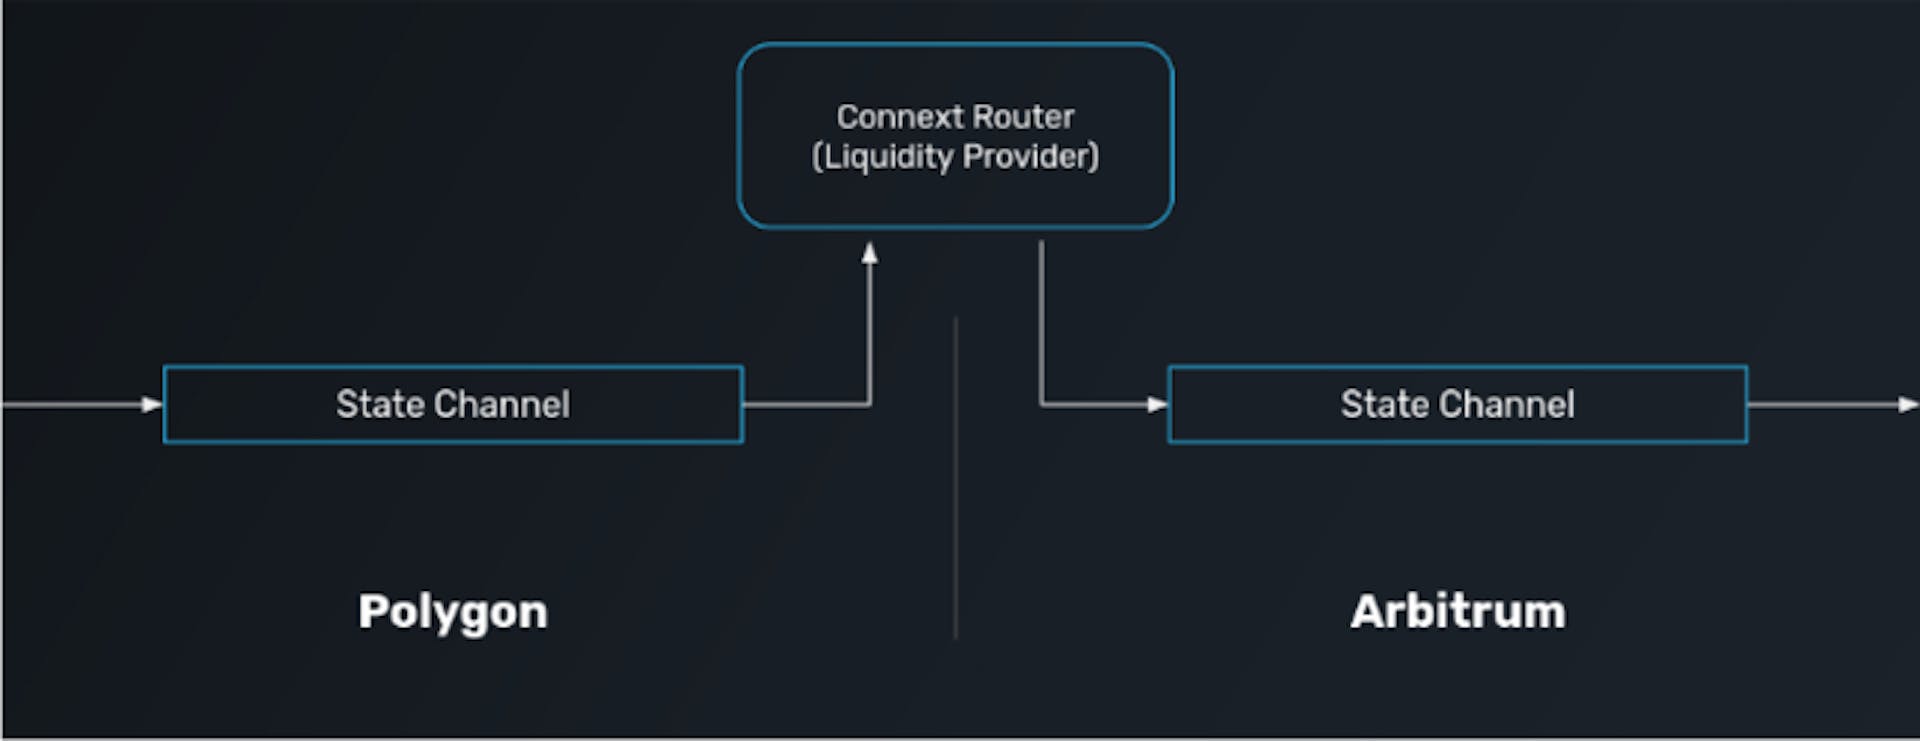 Source: Solving the Liquidity Problem, by Arjun Bhuptani